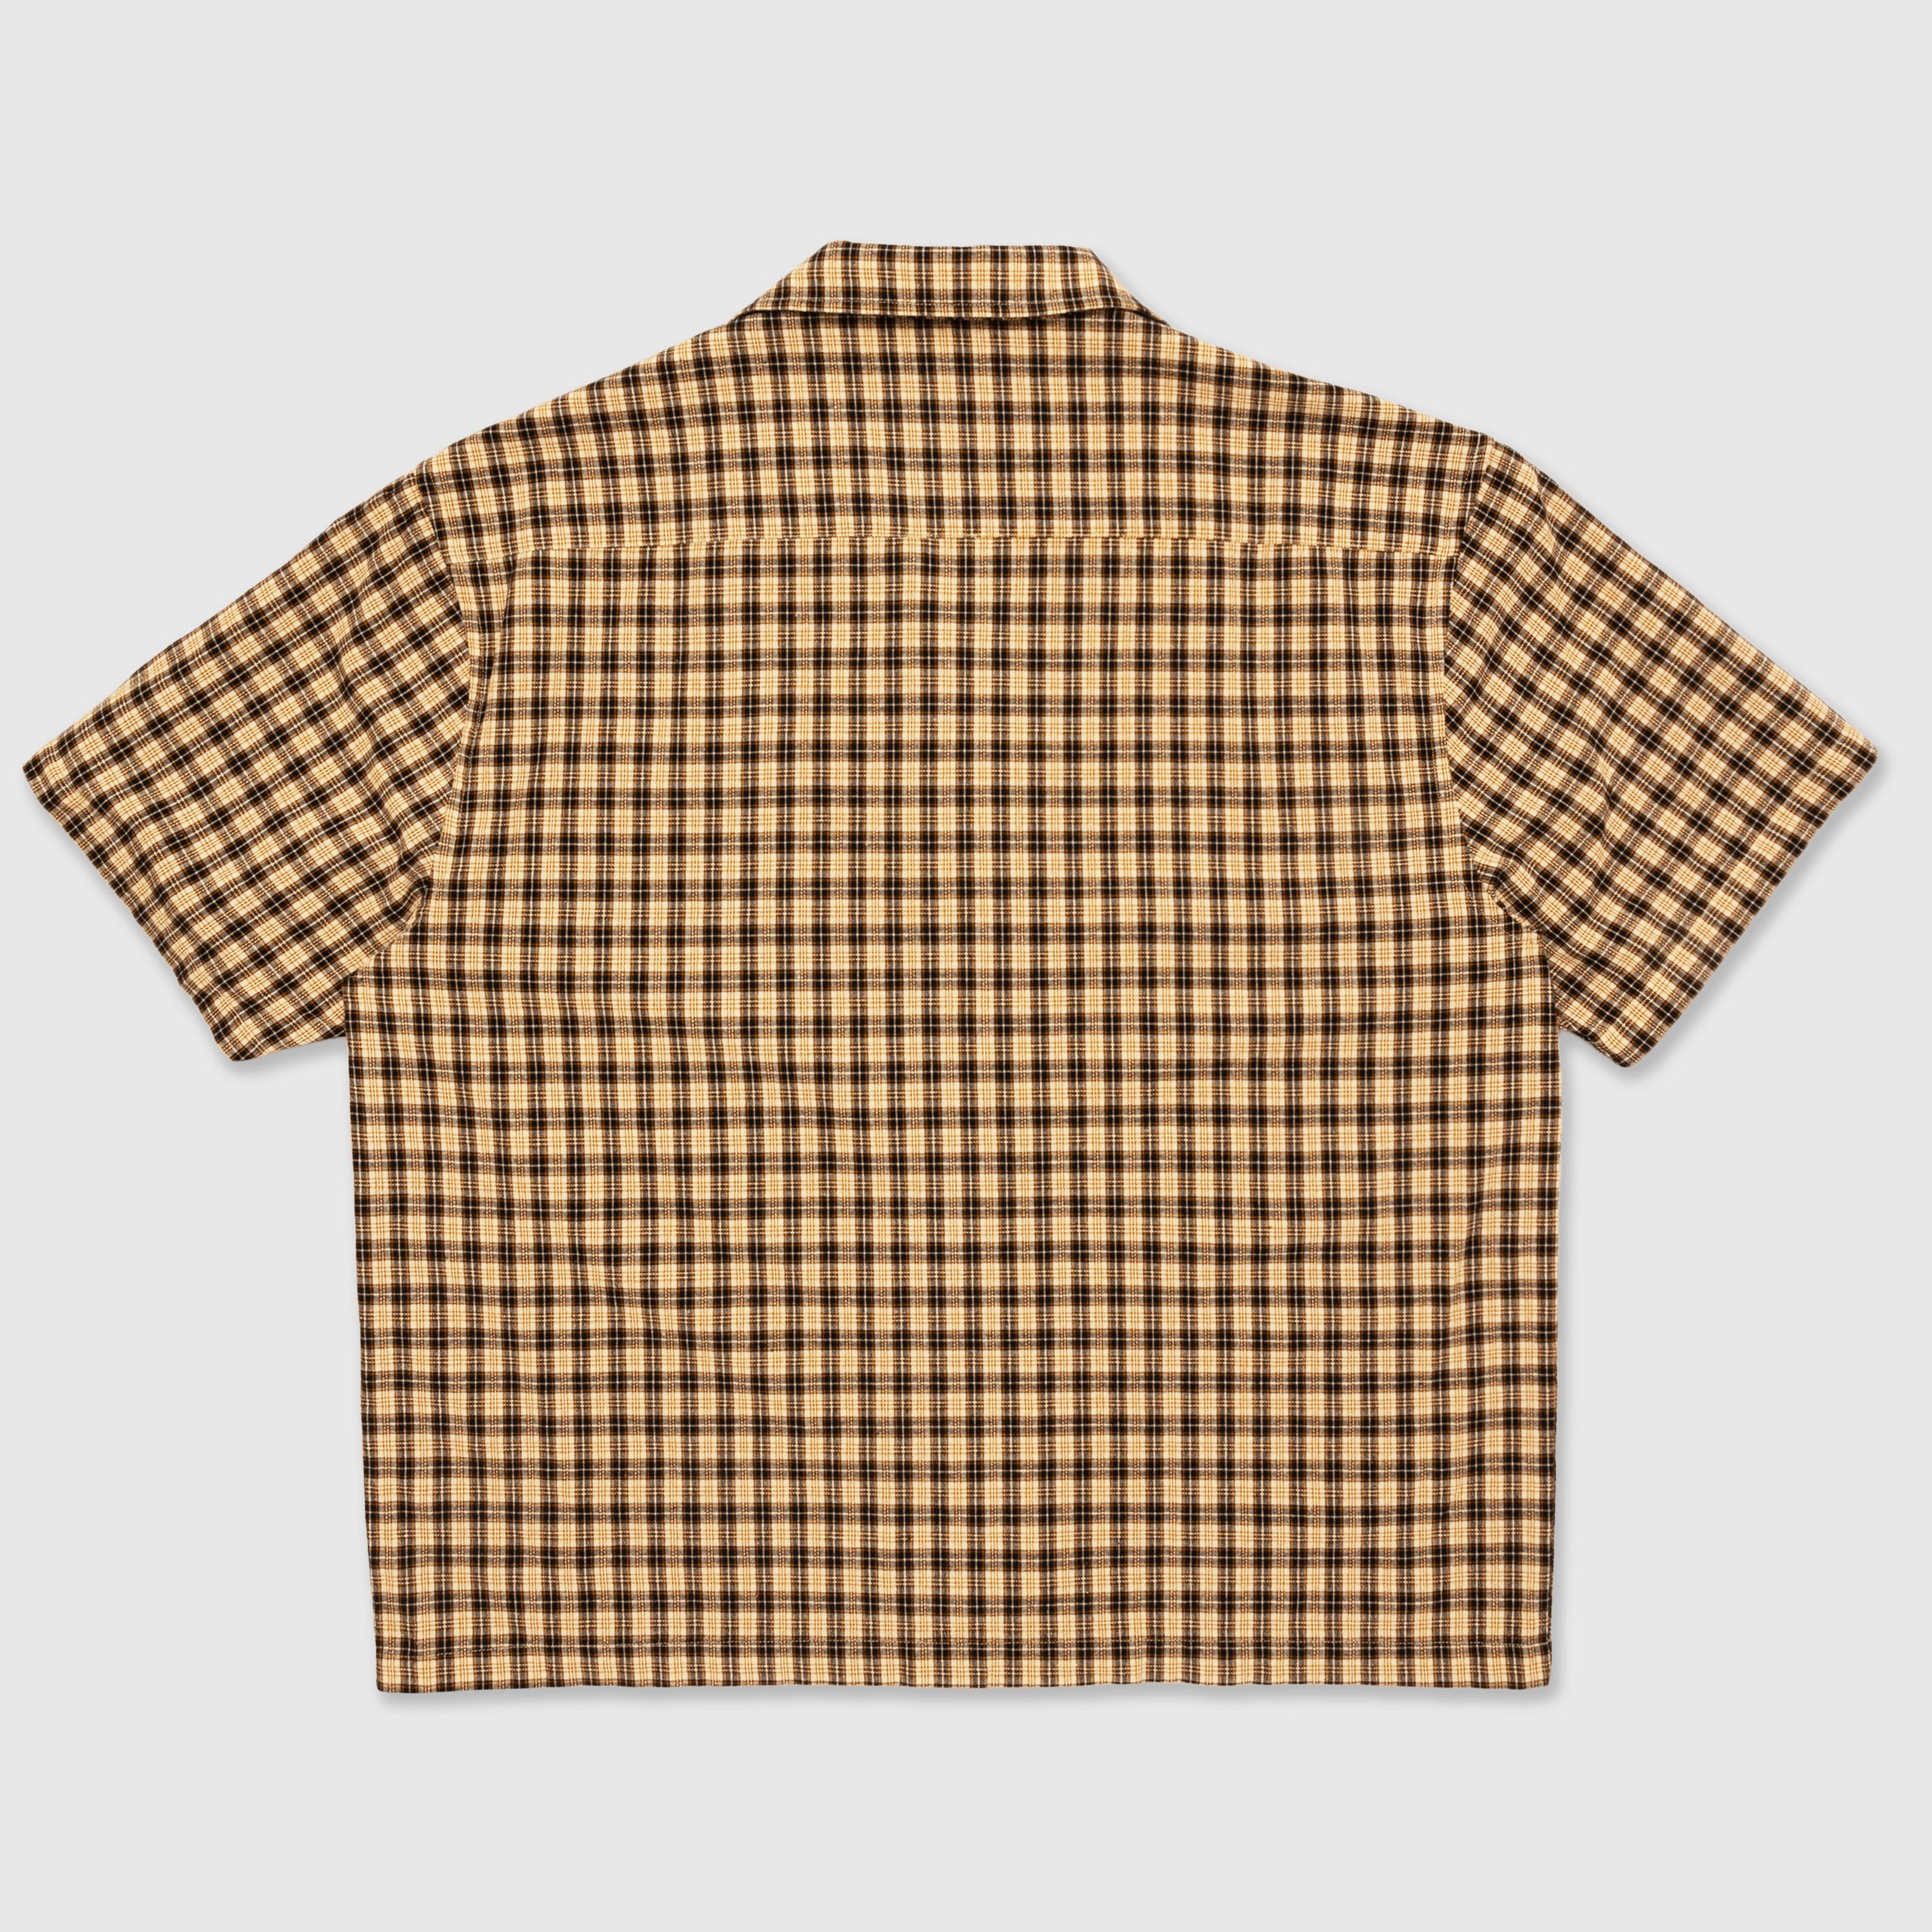 Black/Tan Plaid Button Up Shirt